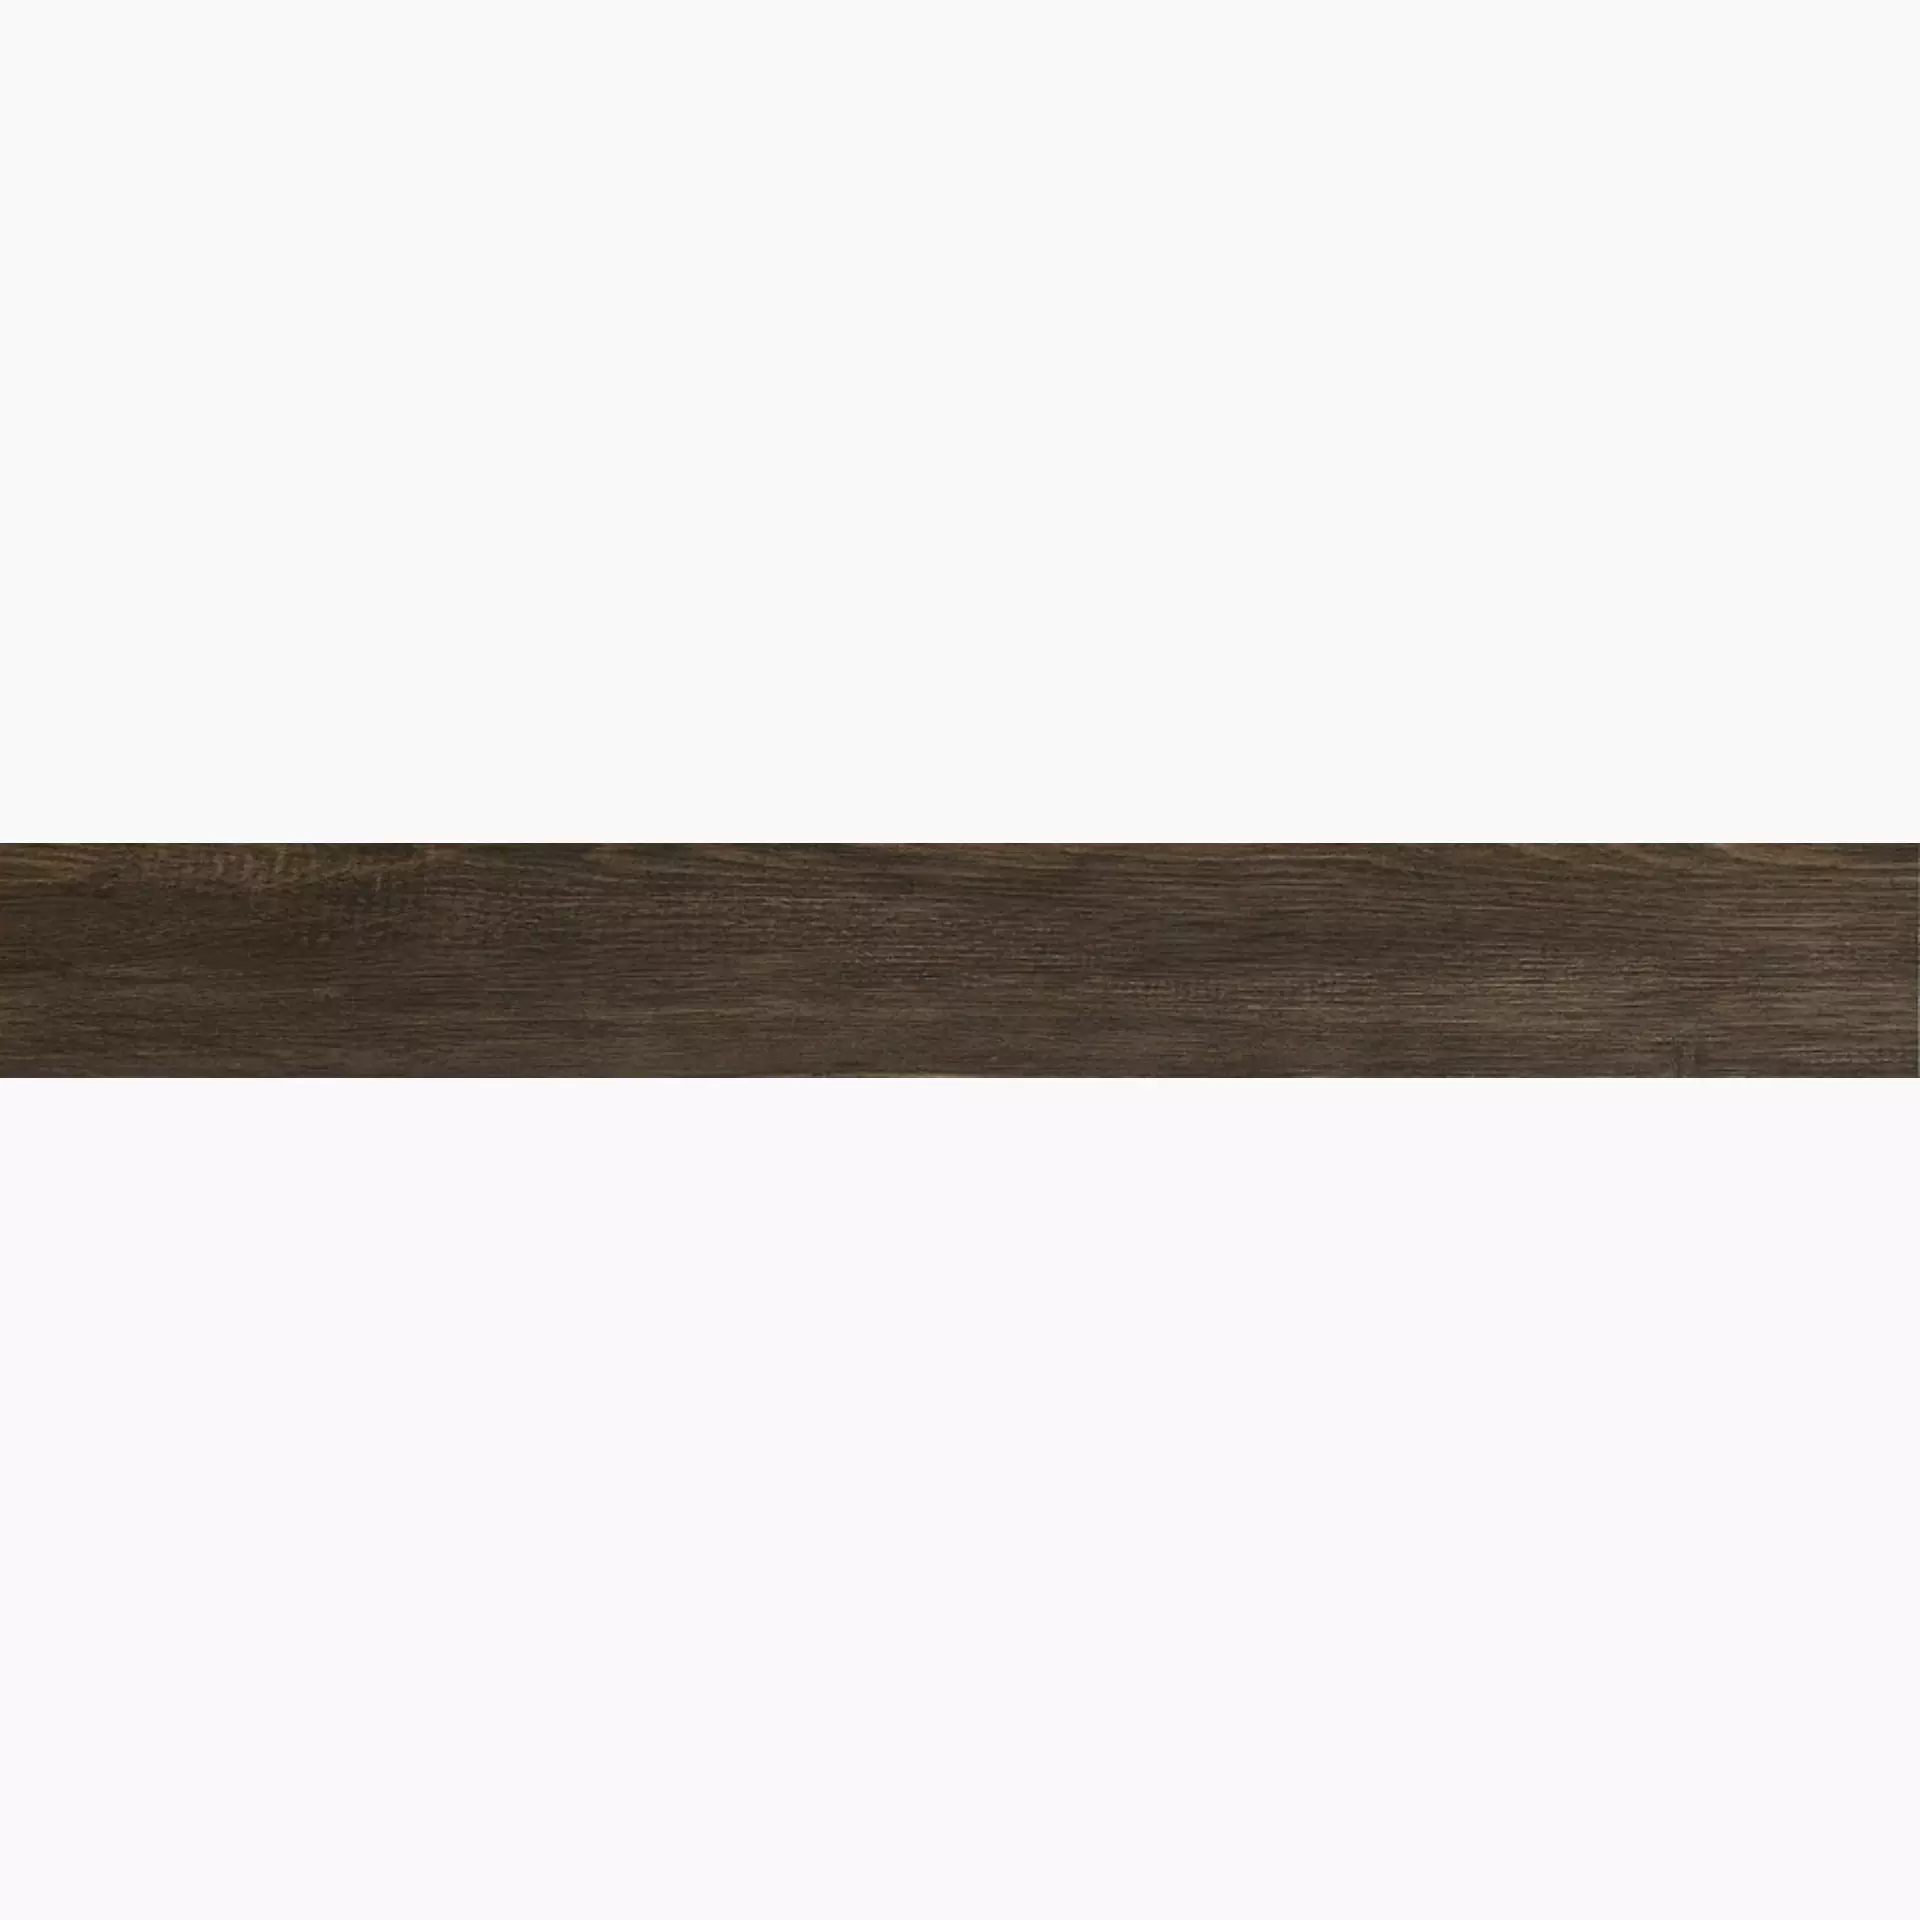 Iris E-Wood Black Naturale 898010 11x90cm 9mm